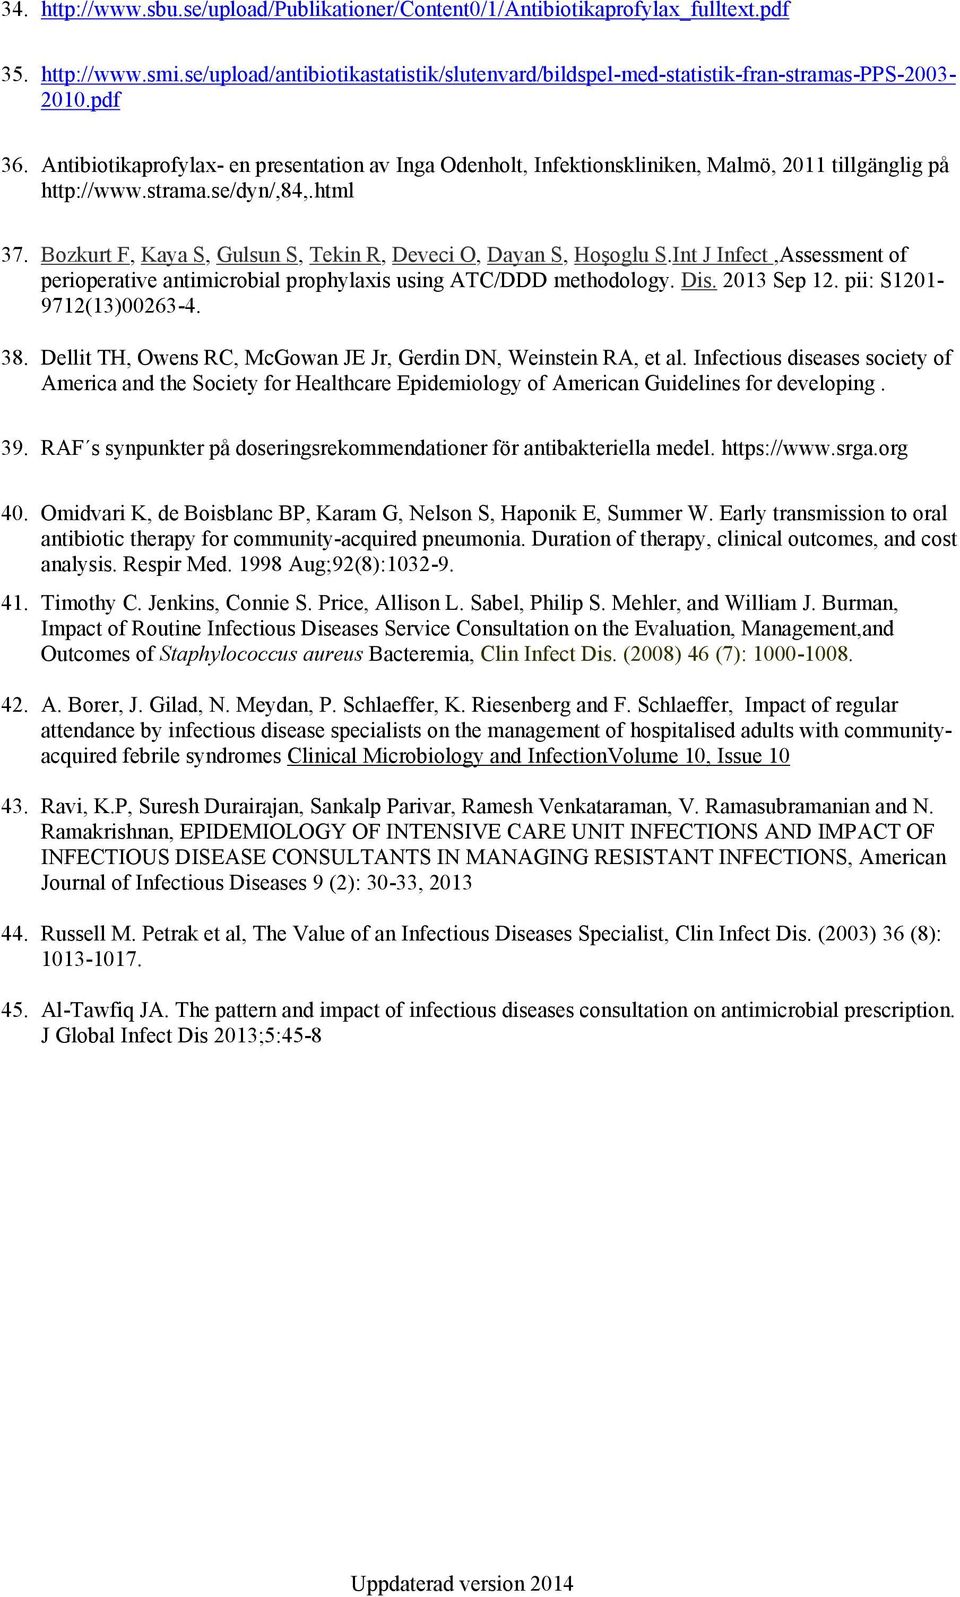 Bozkurt F, Kaya S, Gulsun S, Tekin R, Deveci O, Dayan S, Hoşoglu S.Int J Infect,Assessment of perioperative antimicrobial prophylaxis using ATC/DDD methodology. Dis. 2013 Sep 12.